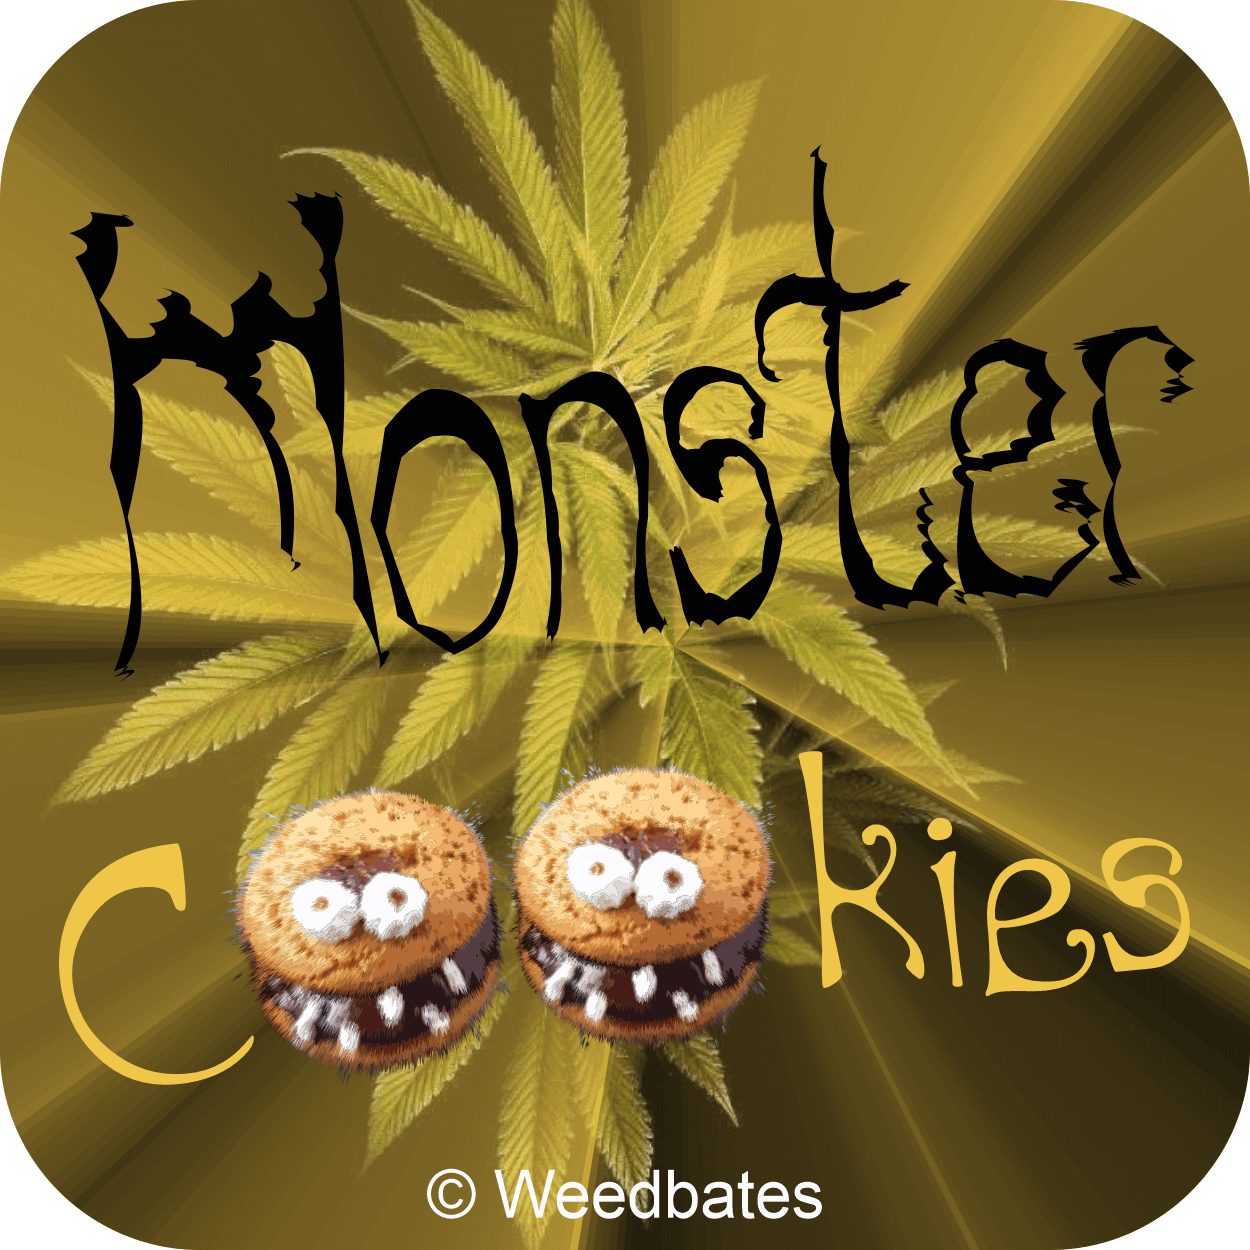 Monster Cookies strain